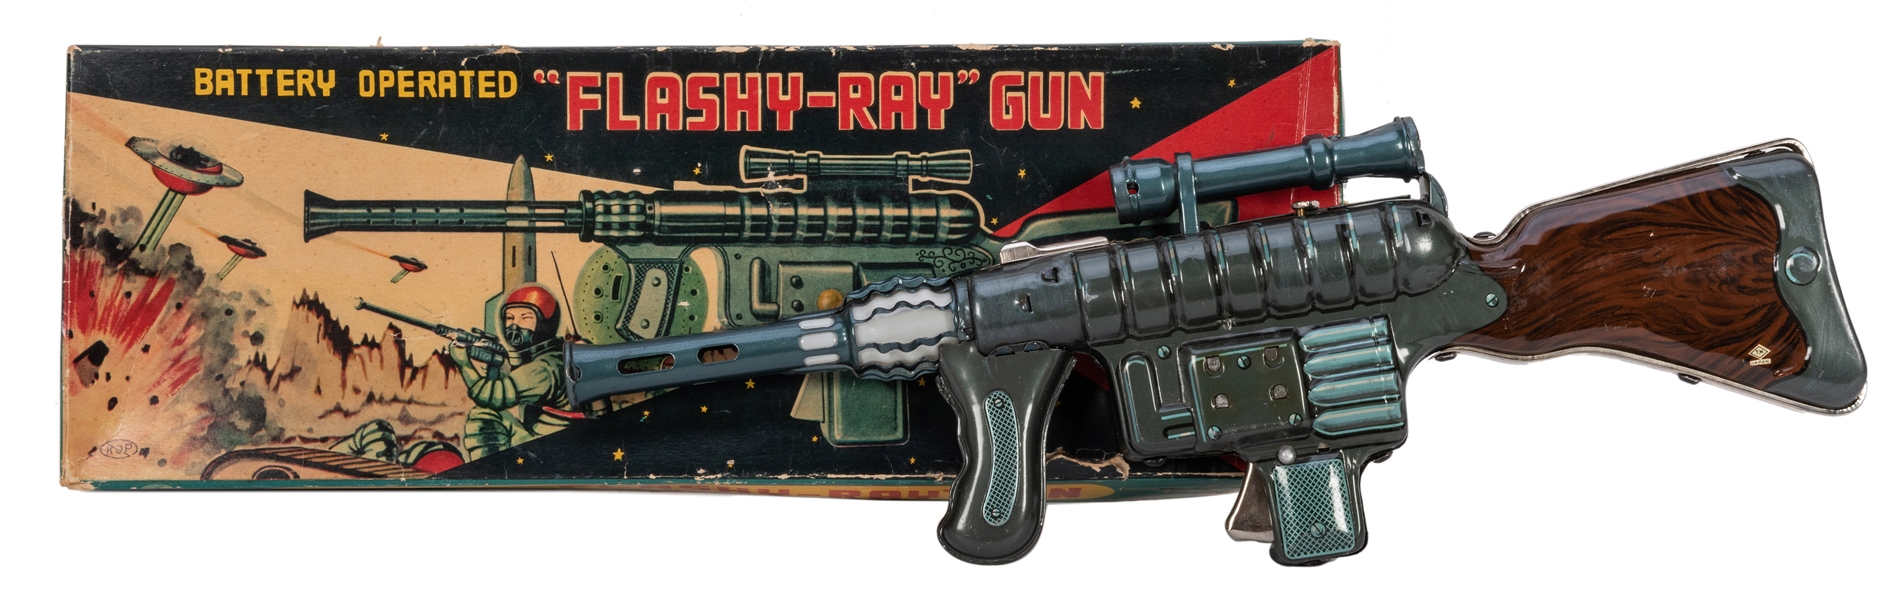  Battery-Operated “Flashy-Ray” Gun in Original Box. 